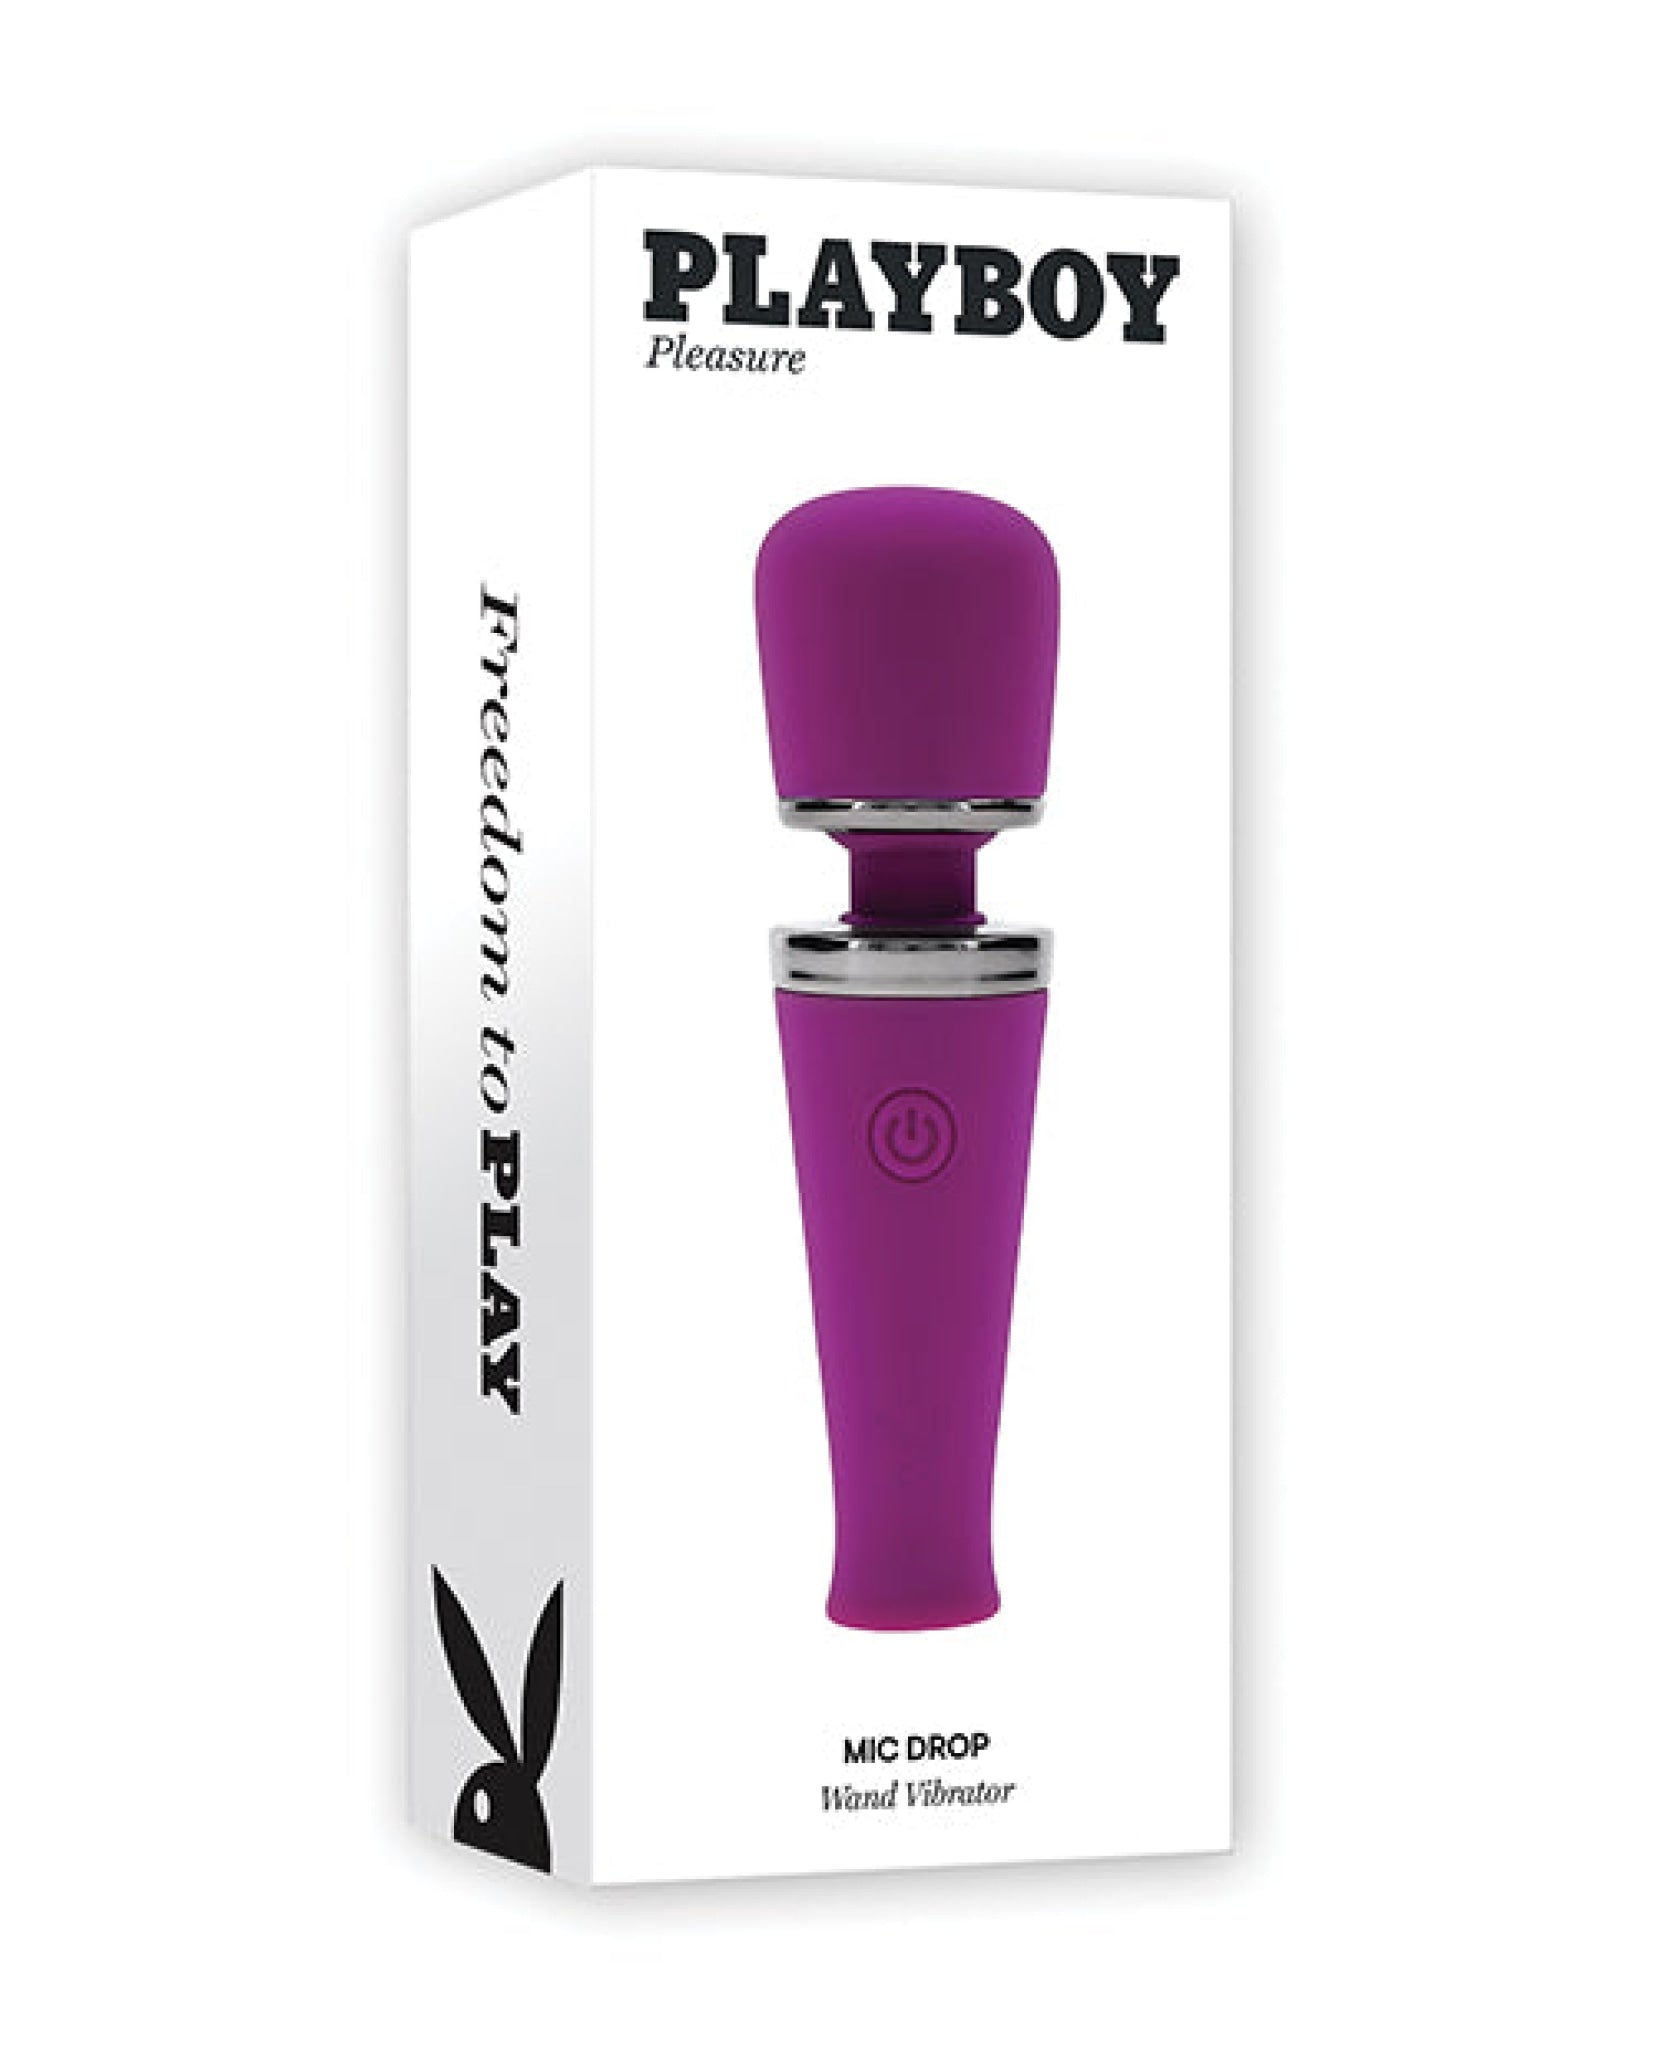 Playboy Pleasure Mic Drop Petite Wand Vibrator - Fuschia Evolved Novelties INC